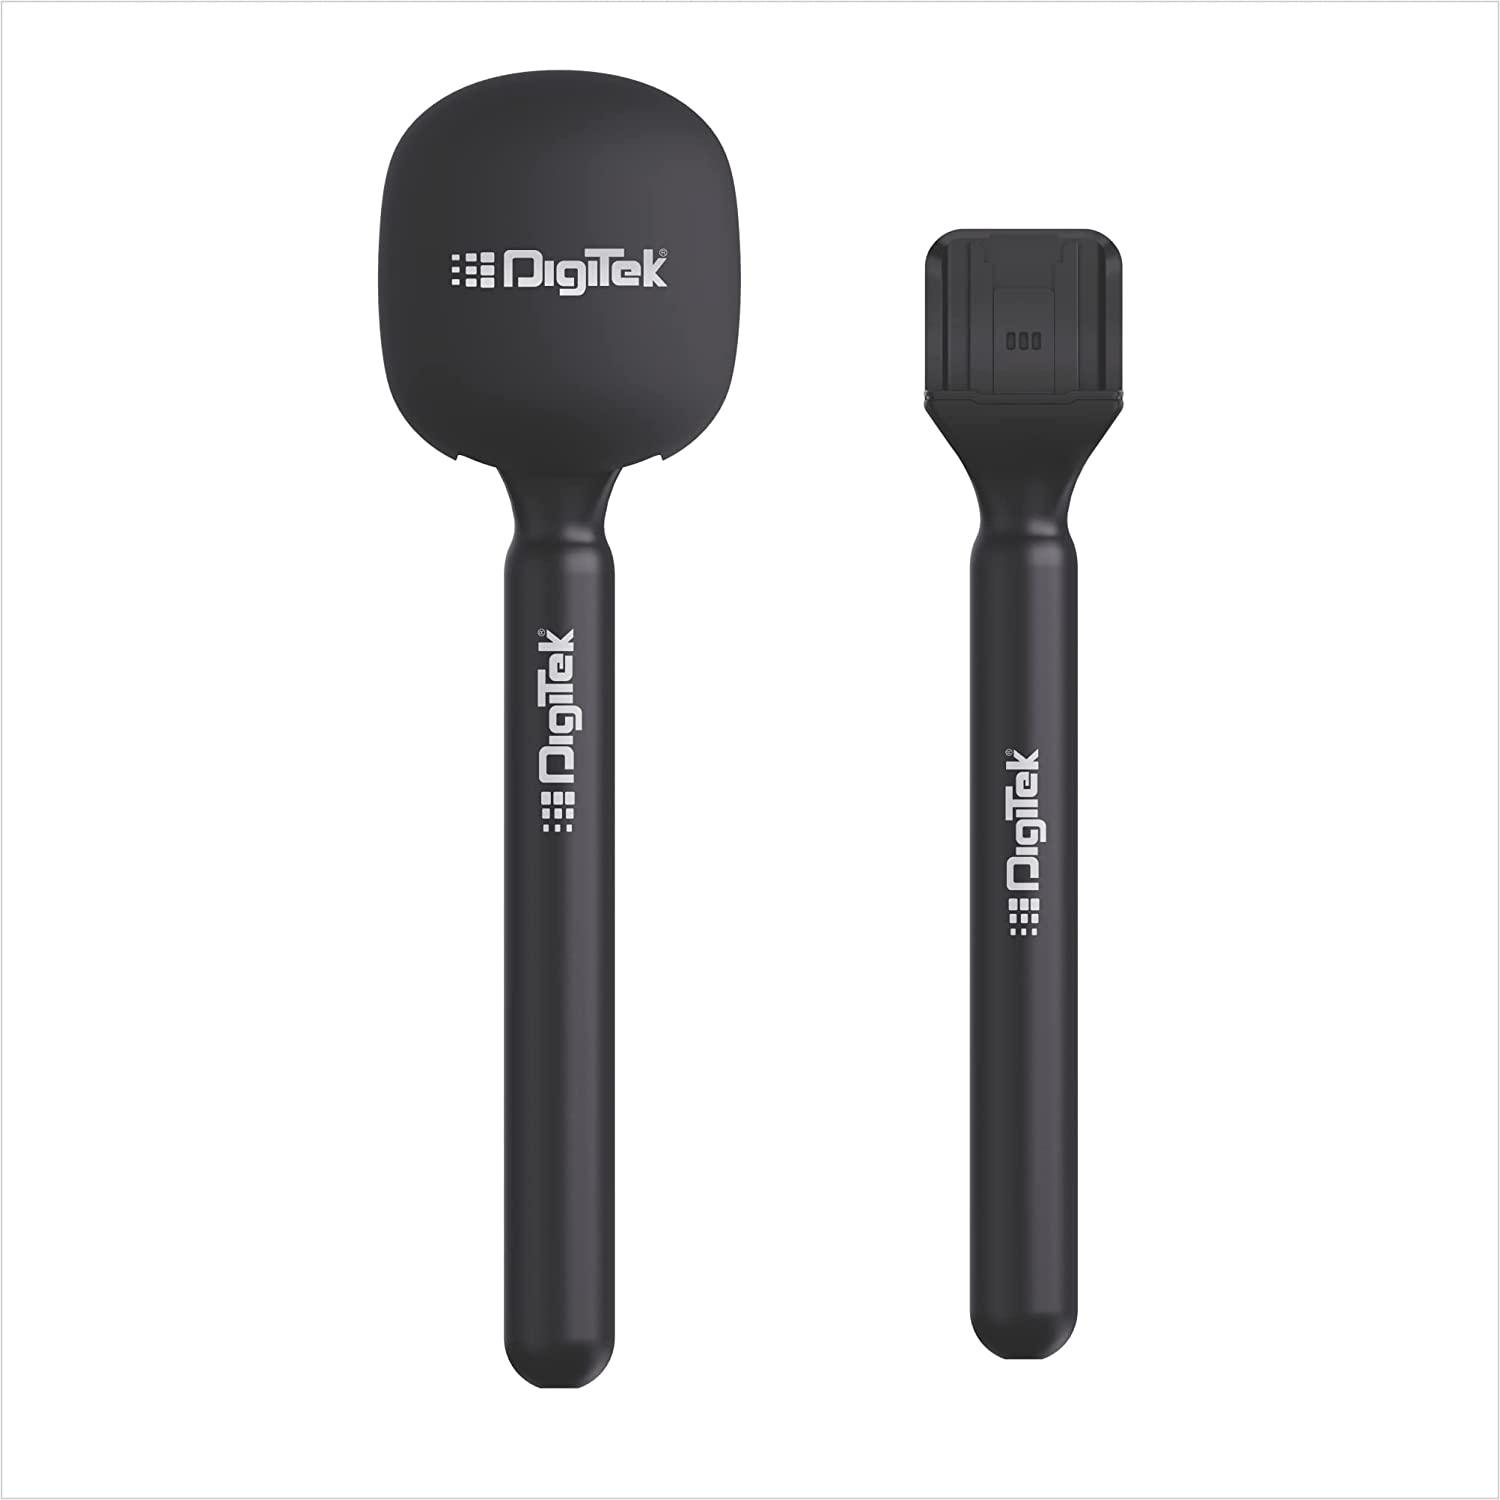 Digitek (DHMA-101) Interview Adapter Compatible with DWM 101 & Other Wireless GO Trensmitter DHMA-101 Includes a Foam Windshield to Reduce Wind Noise - Digitek